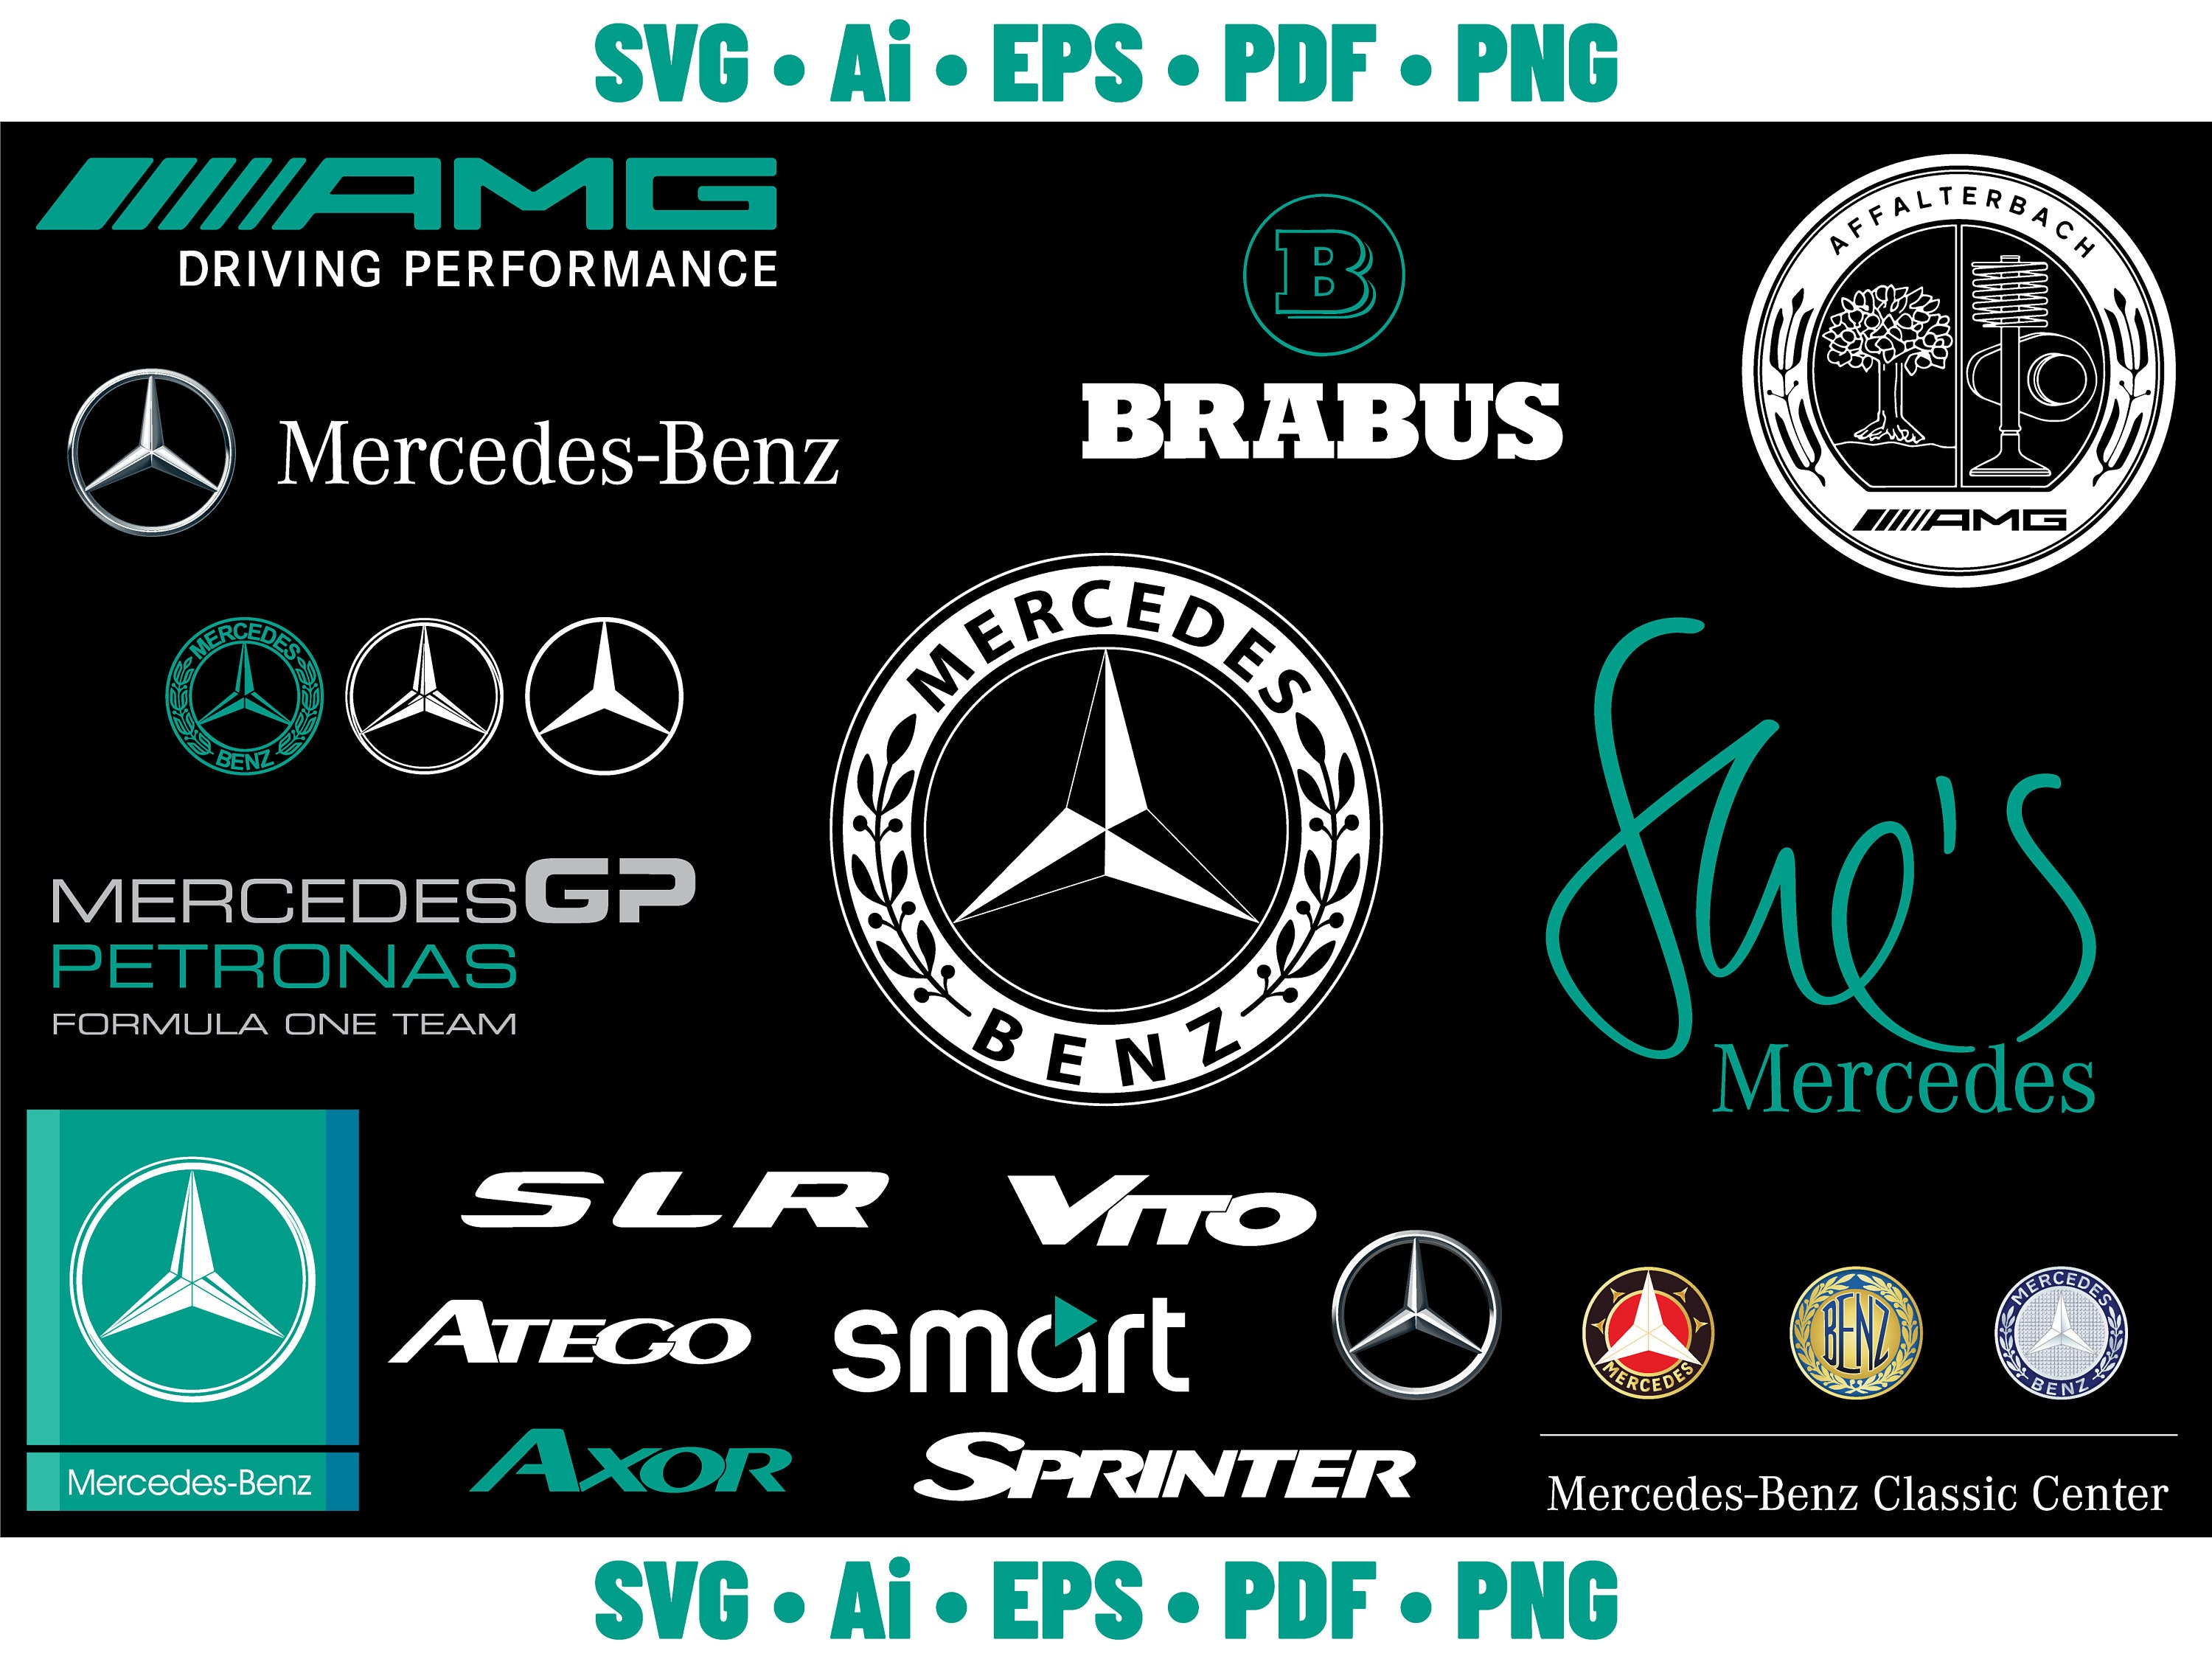 GLS EQS-Class AMG Affalterbach Logo Emblem Front Bumper Hood Sign X167 X296  Genuine Mercedes-AMG A0008170508